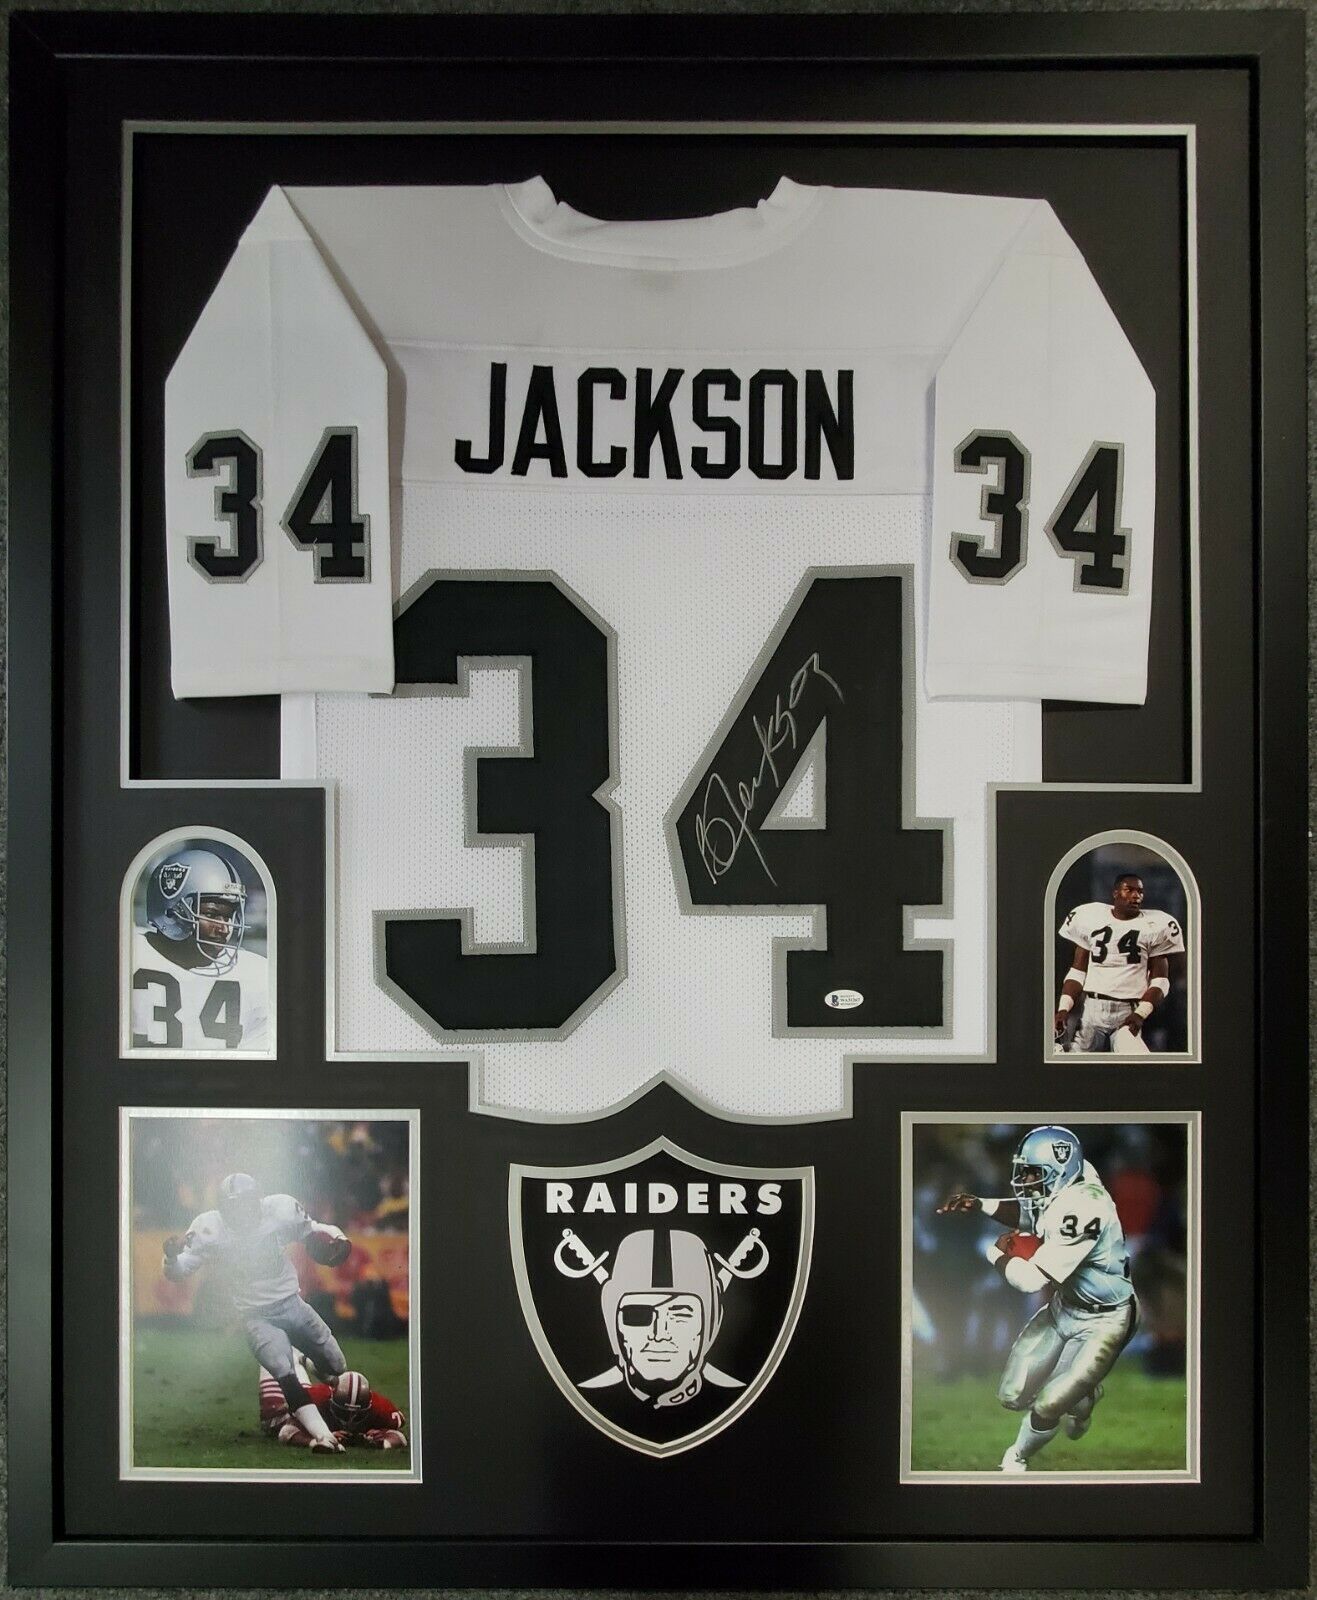 Bo Jackson Autographed Framed Royals Jersey - The Stadium Studio